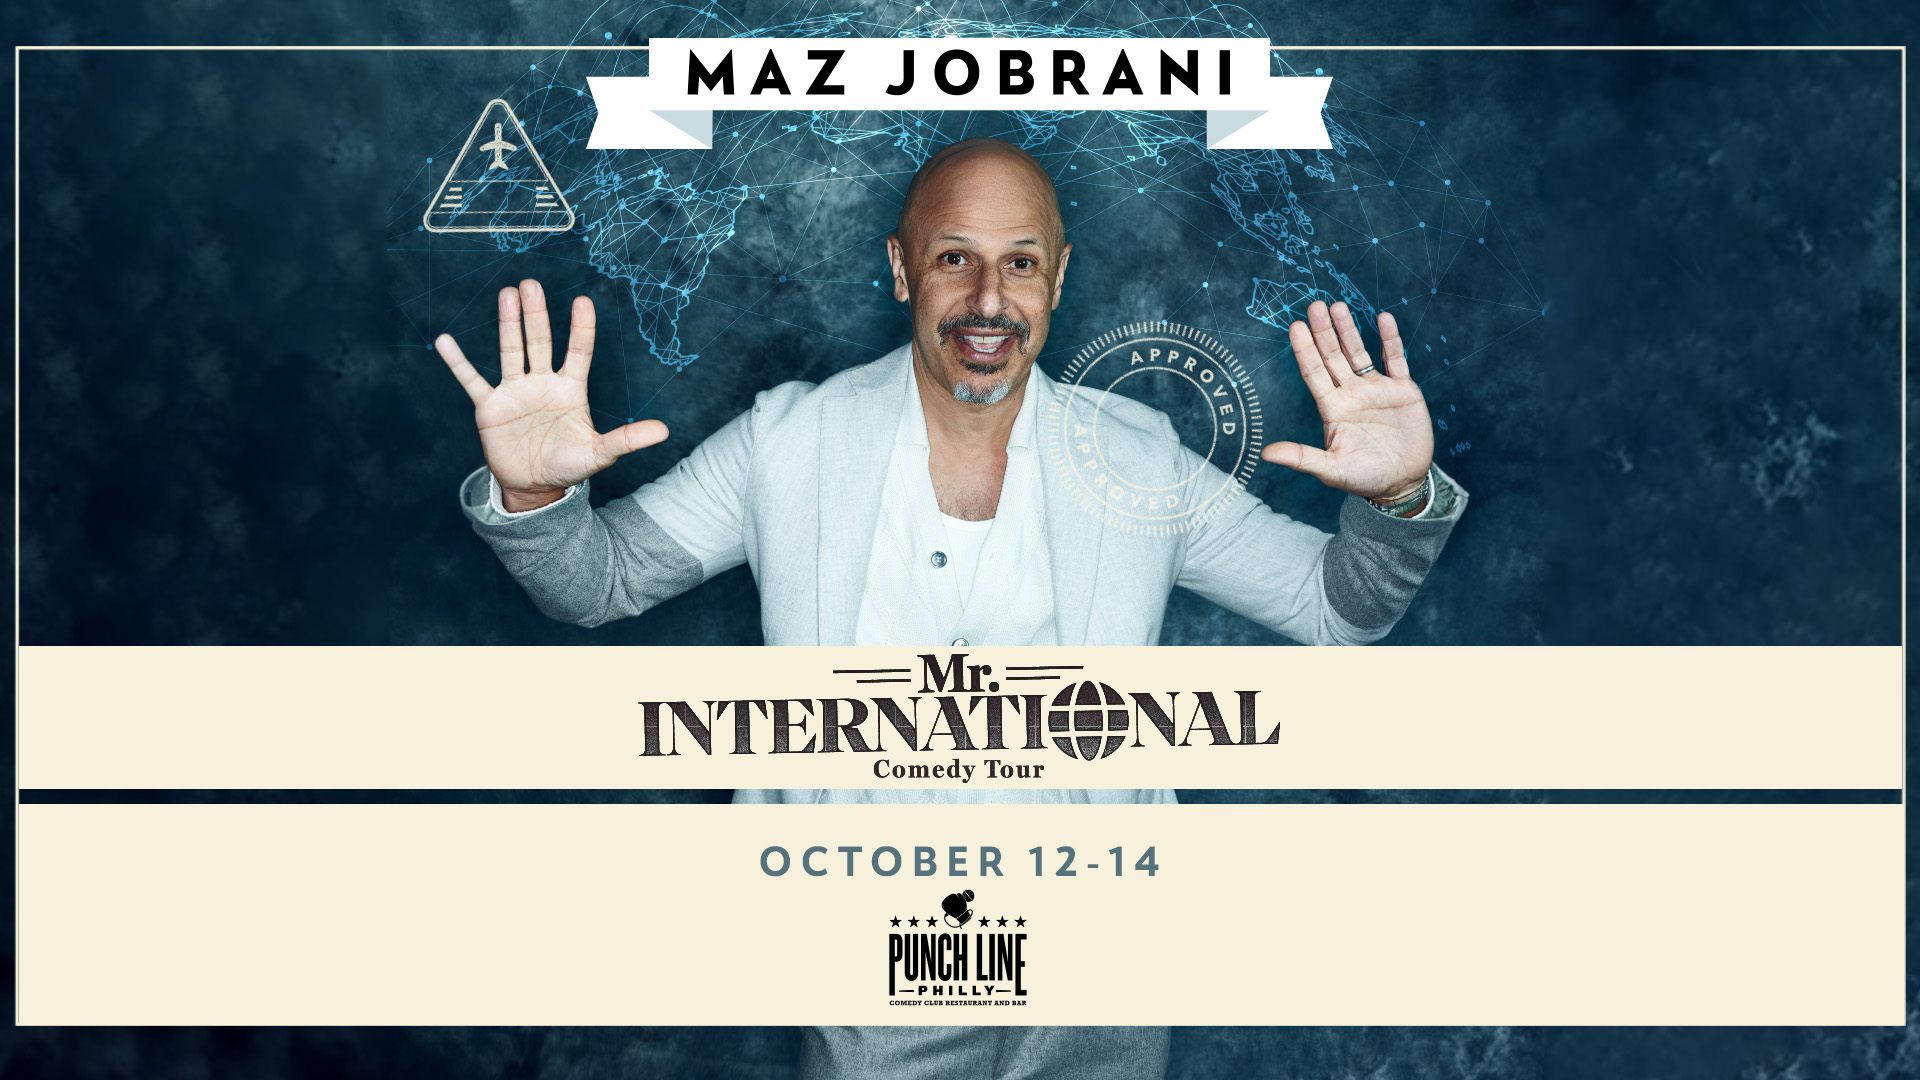 Maz Jobrani: Mr. International Comedy Tour